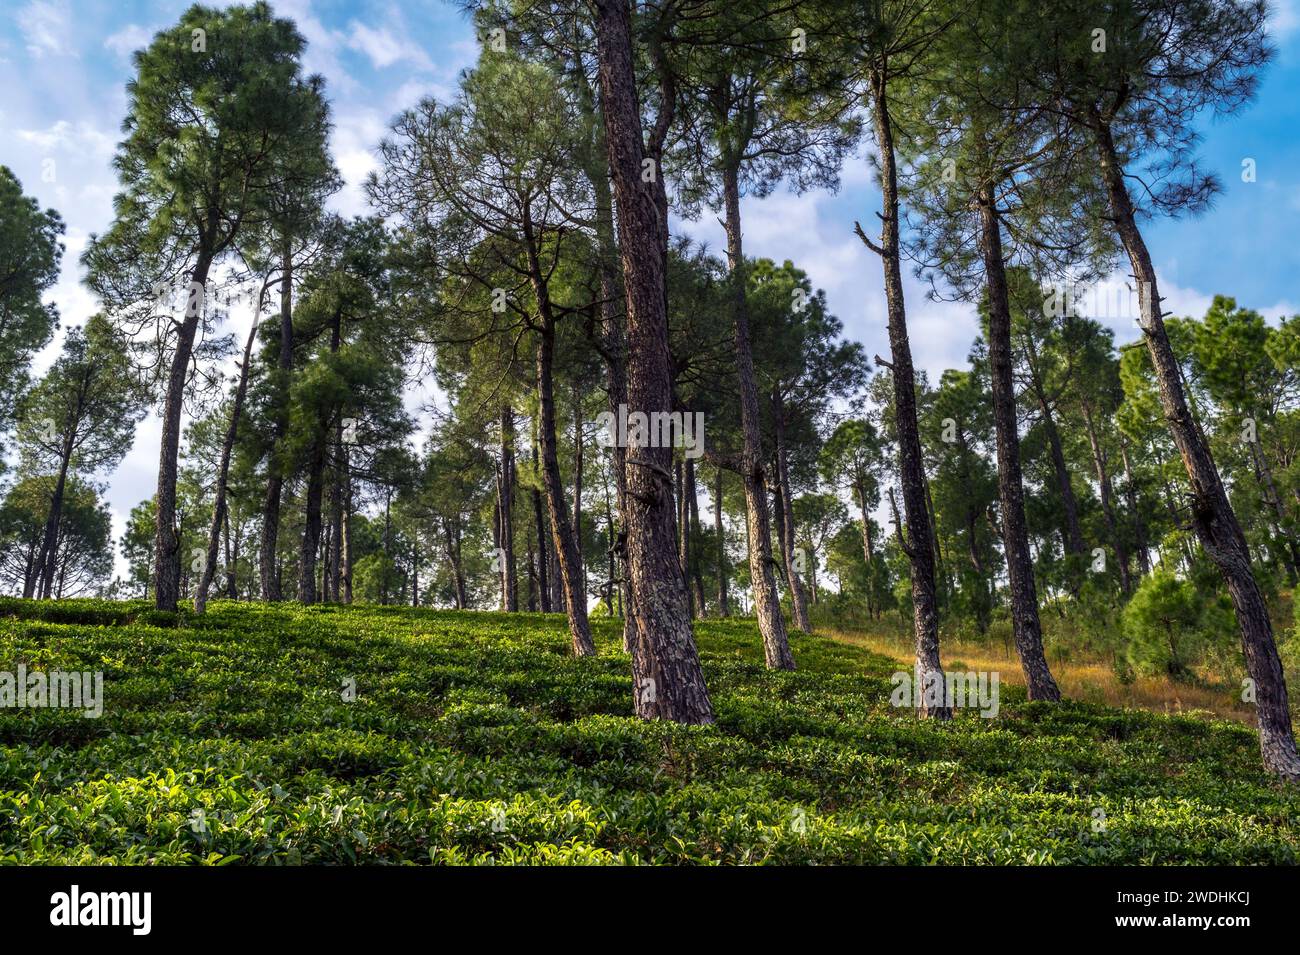 Forest in the morning.  Serine green tea garden landscape in Himalayan region Kausani, Uttarakhand, India. Stock Photo